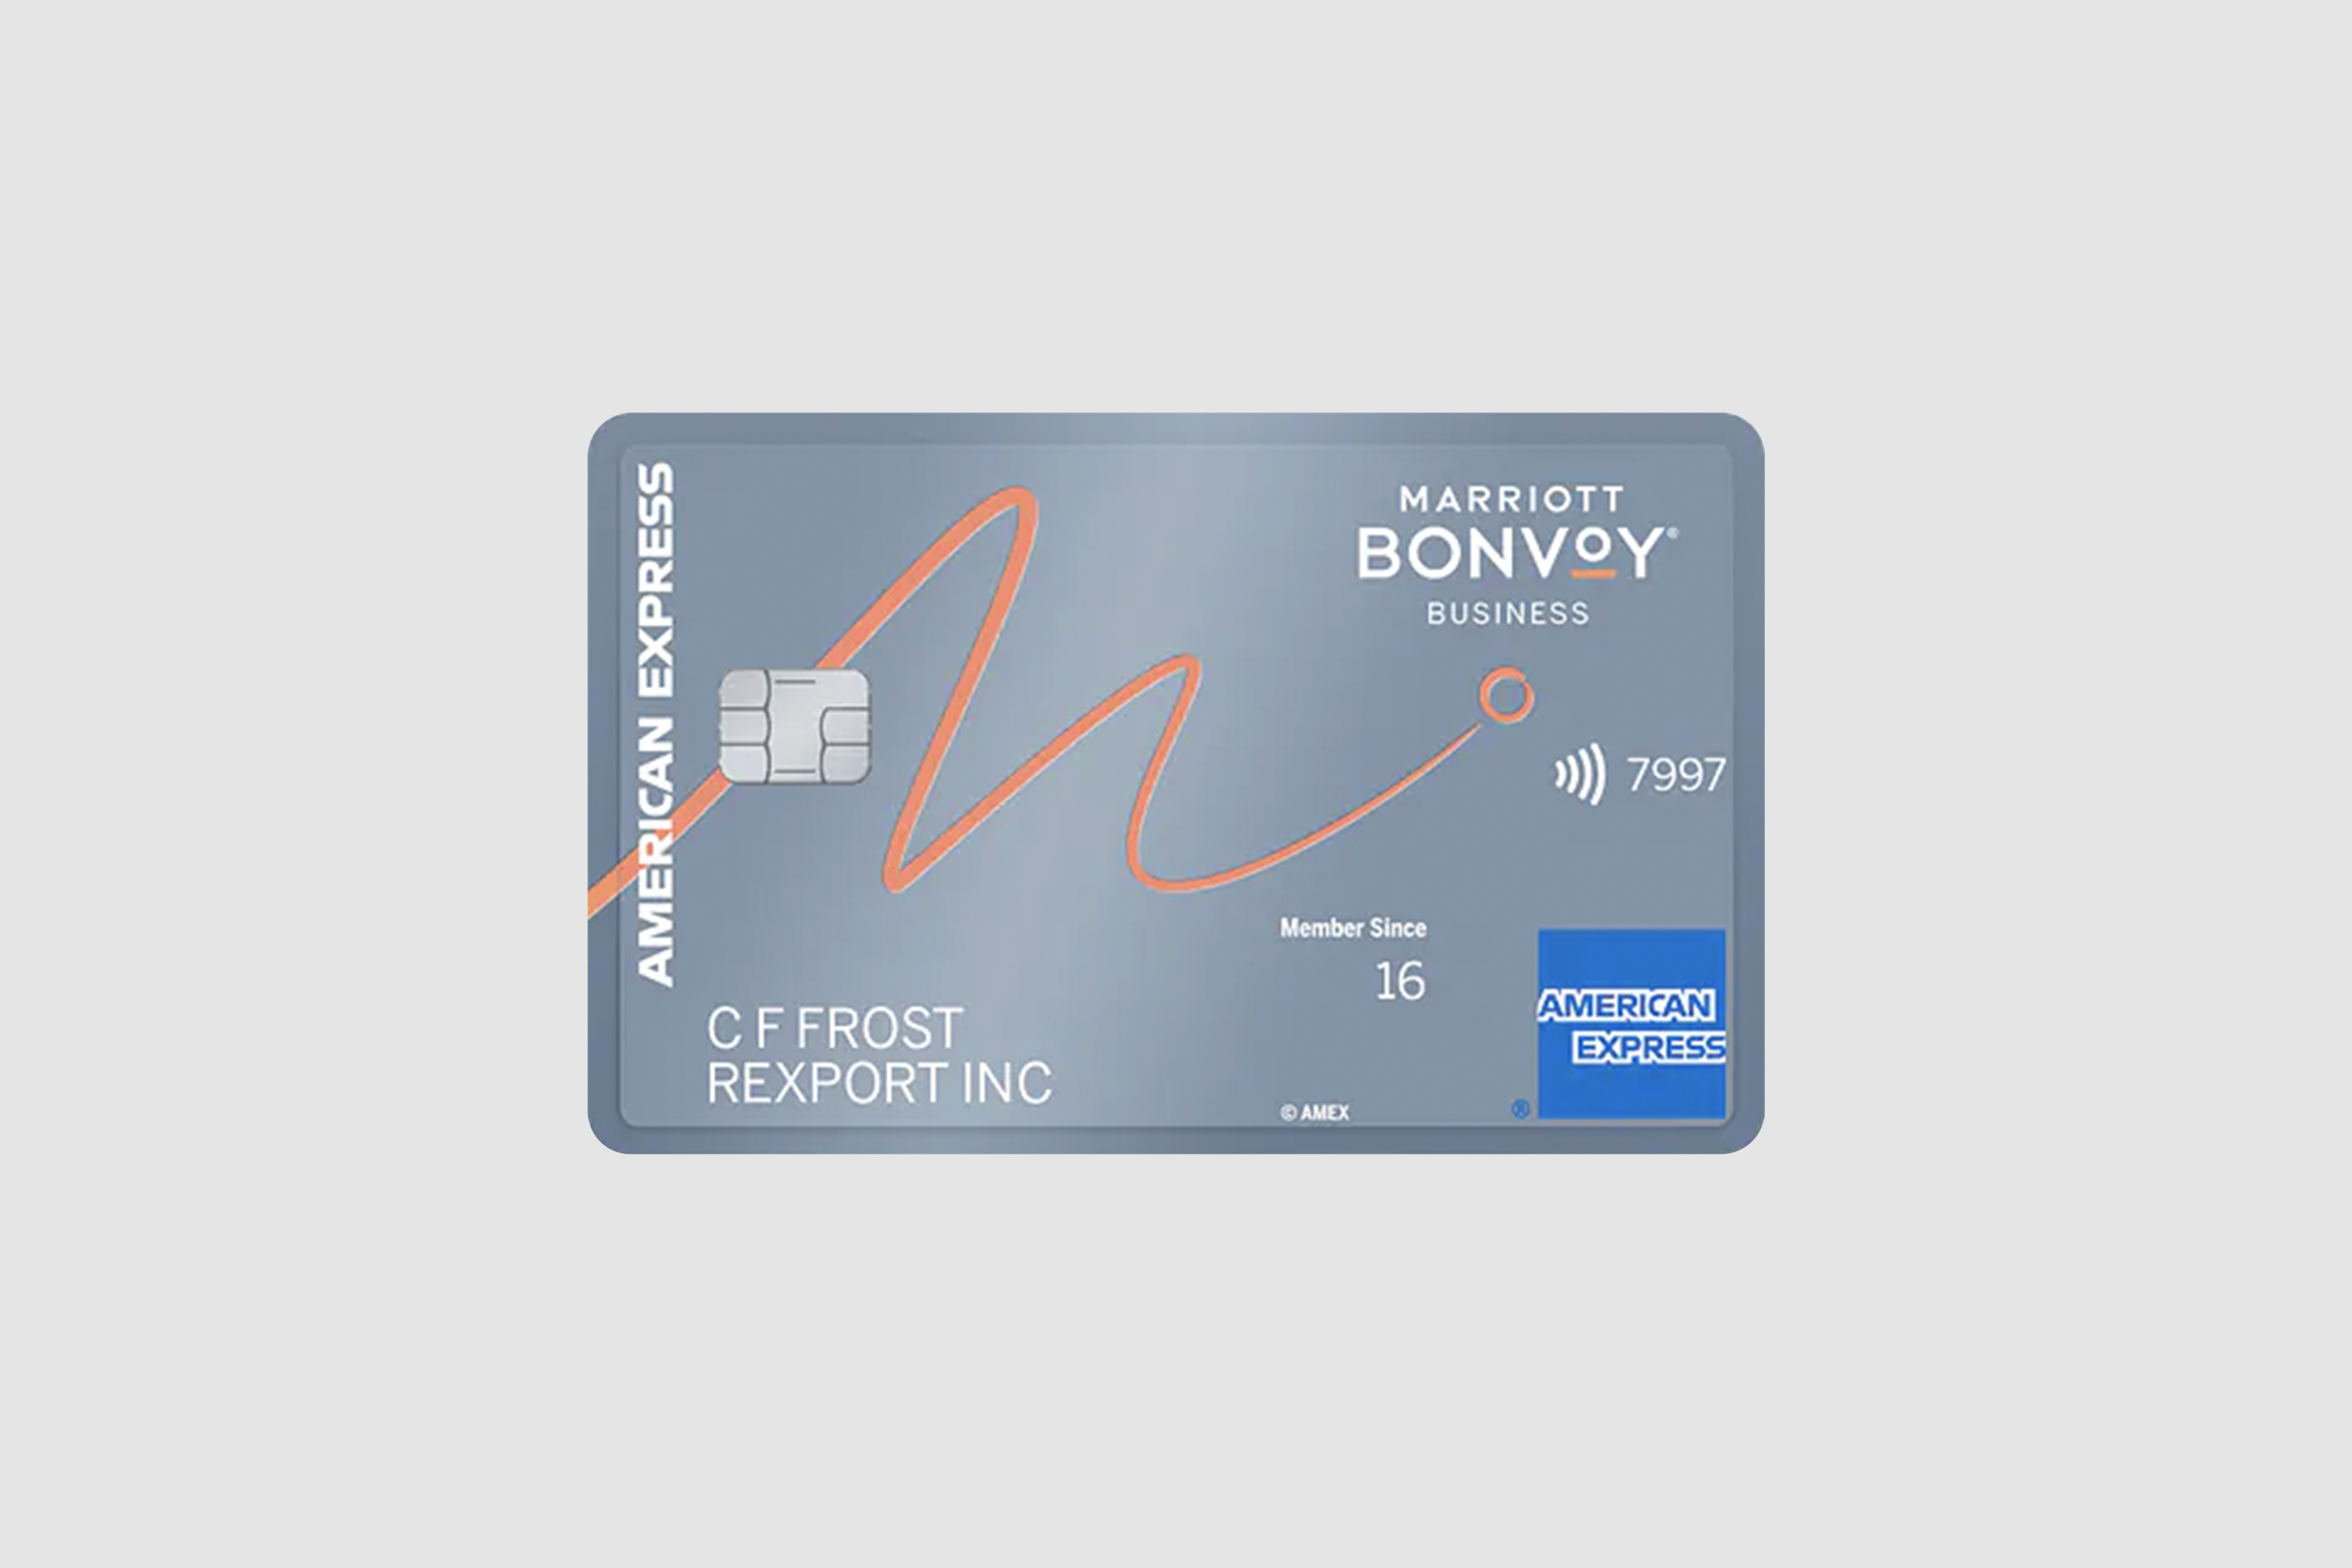 American Express Marriott Bonvoy Business Credit Card